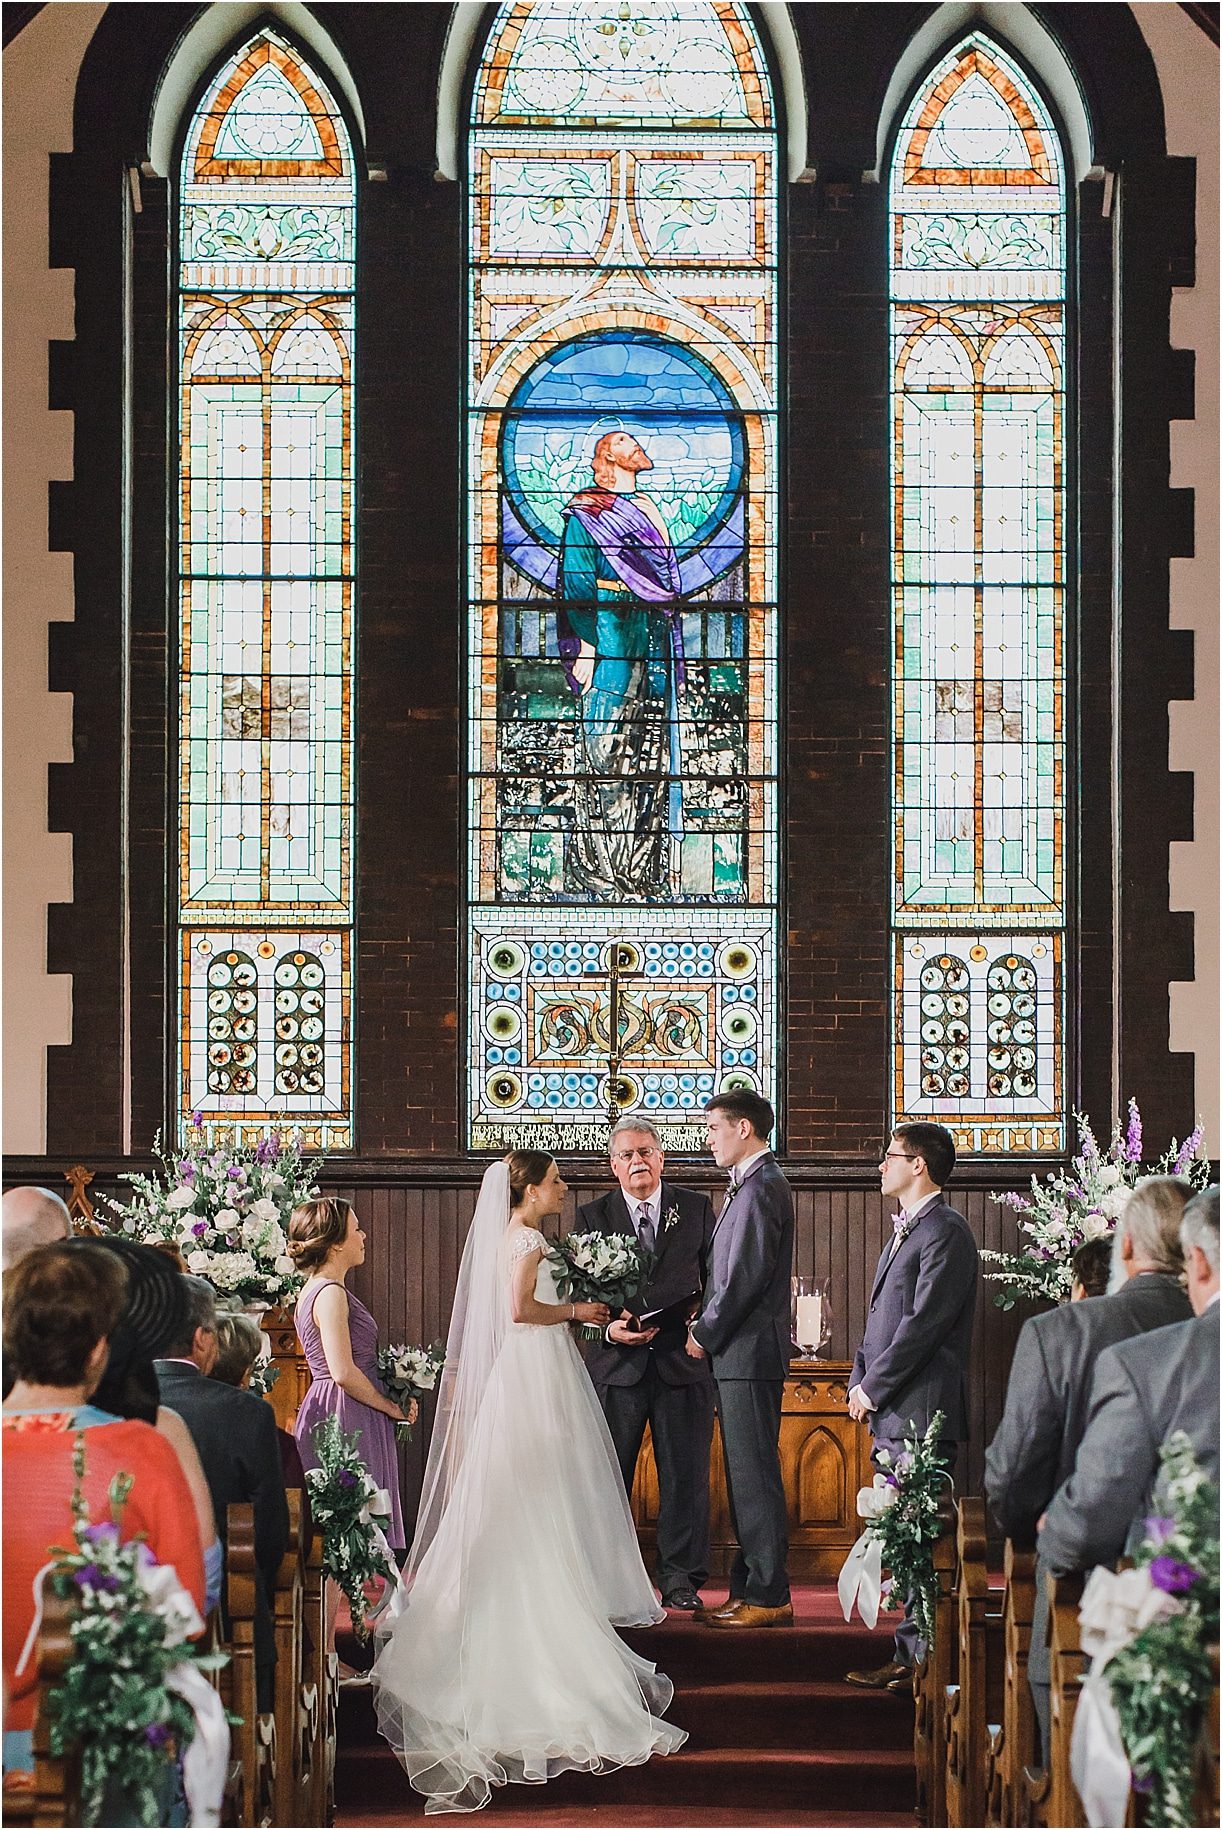 UVA Chapel Wedding | Hill City Bride Virginia Wedding Blog